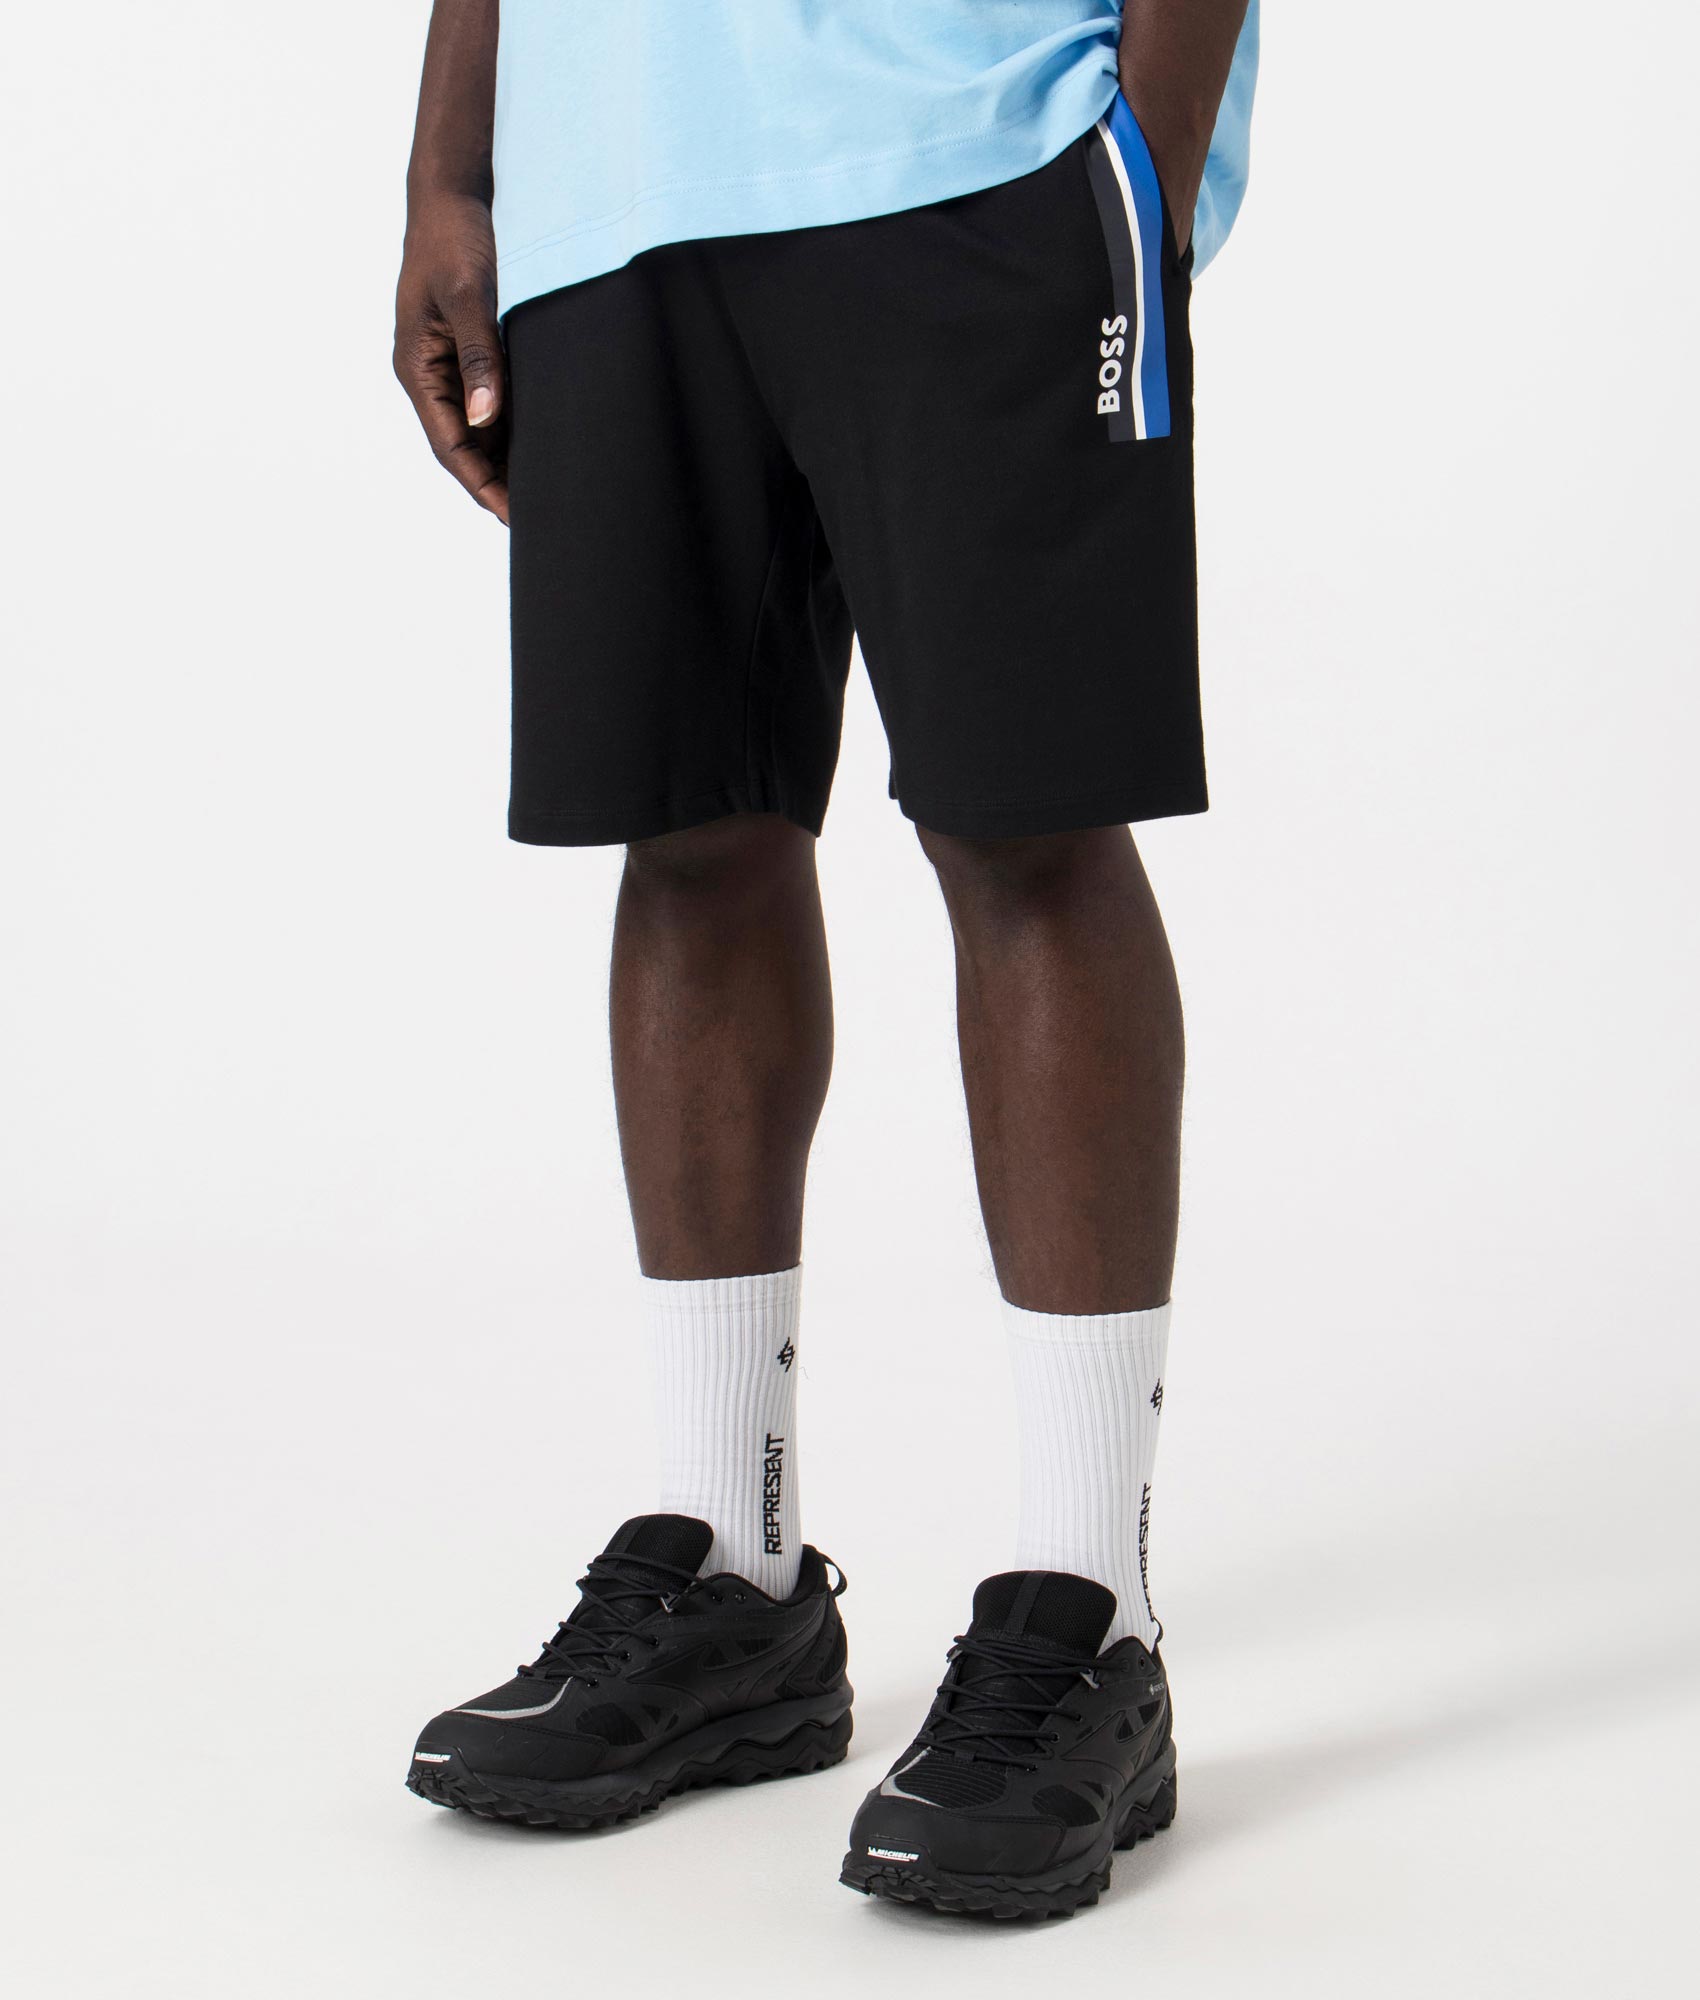 BOSS Mens Authentic Shorts - Colour: 001 Black - Size: Small